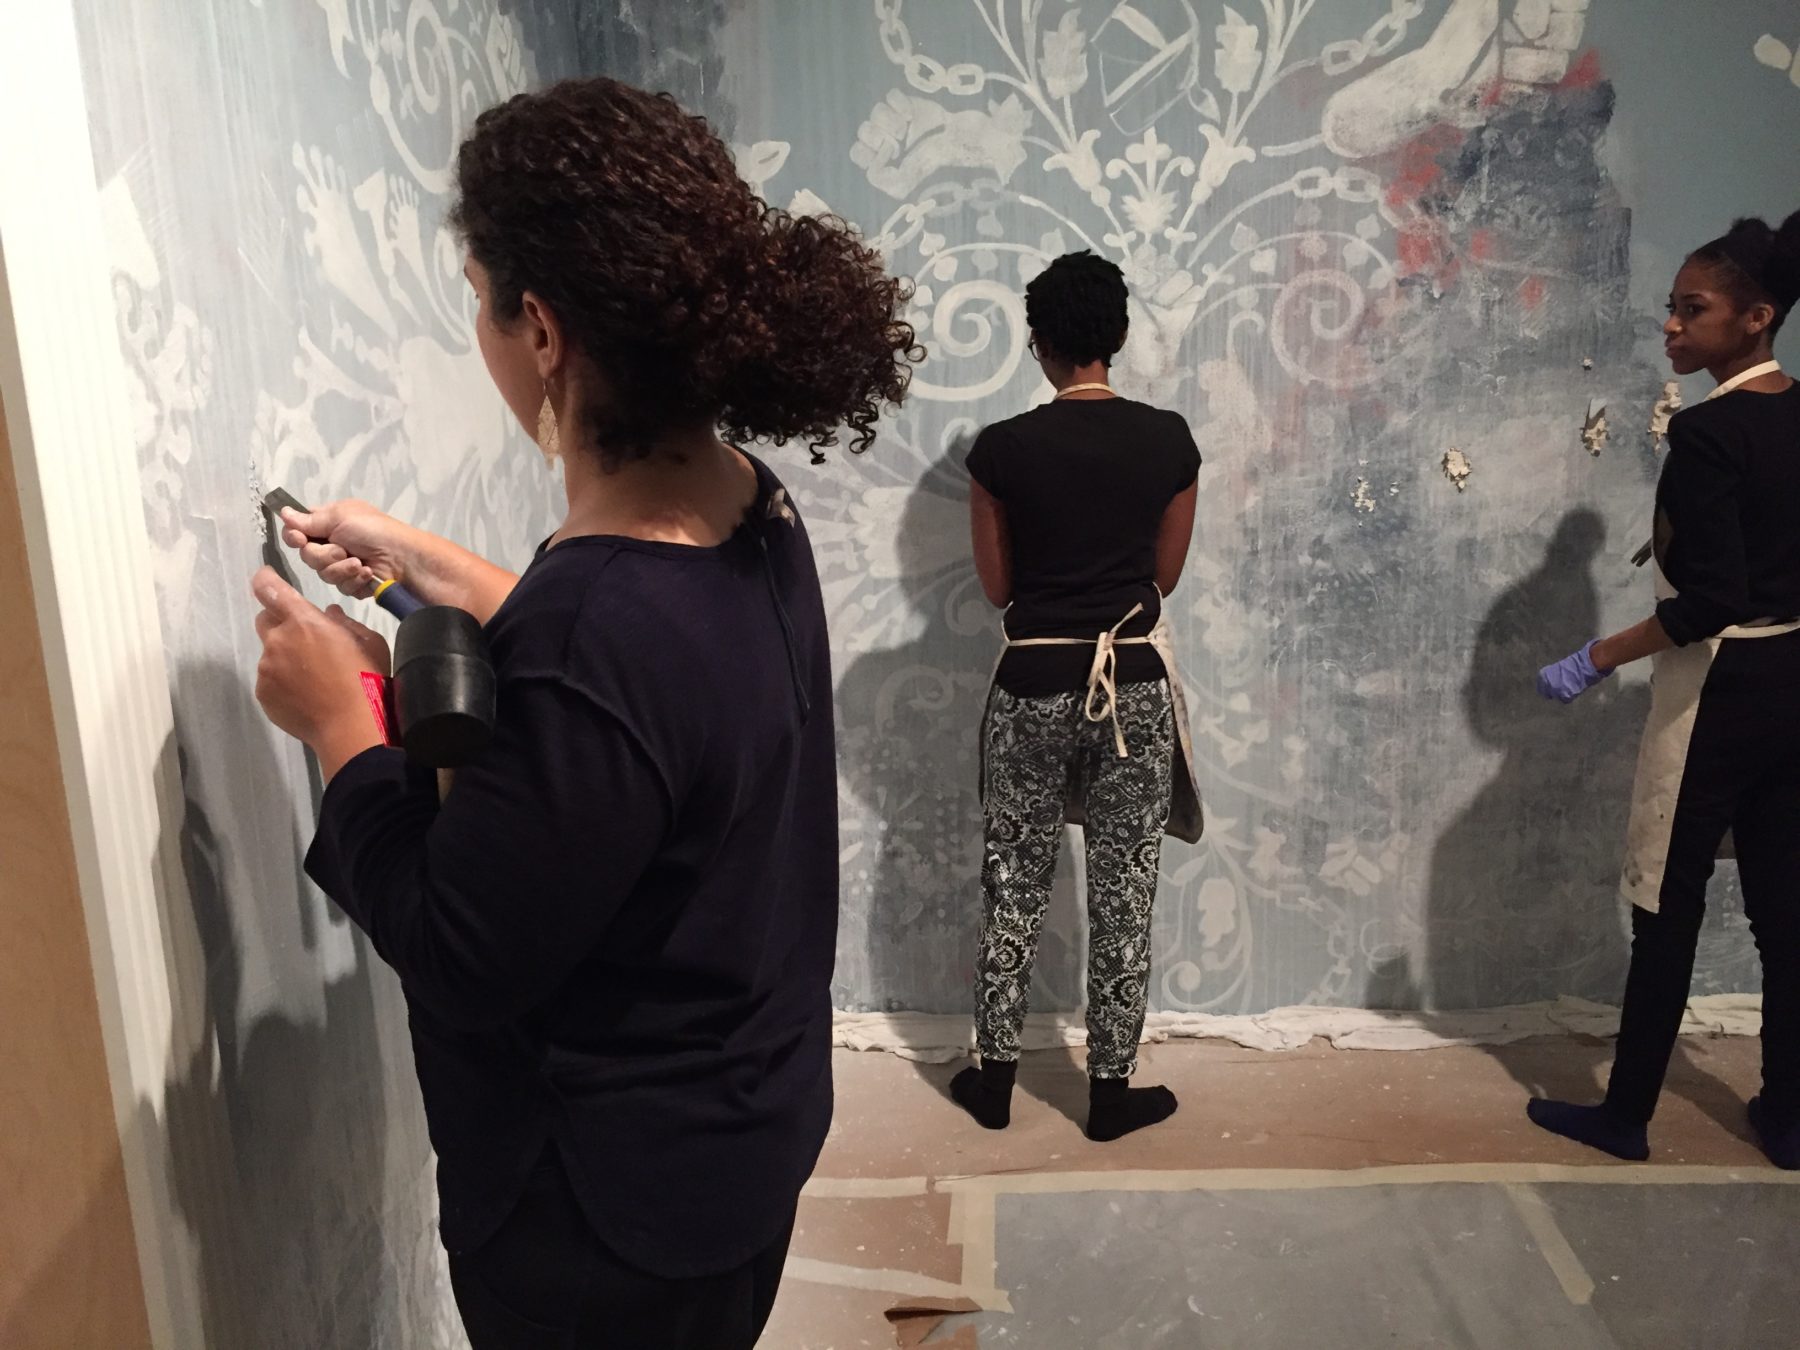 A group of volunteers help artist Firelei Baez scrape paint off a wall in her exhibition gallery.